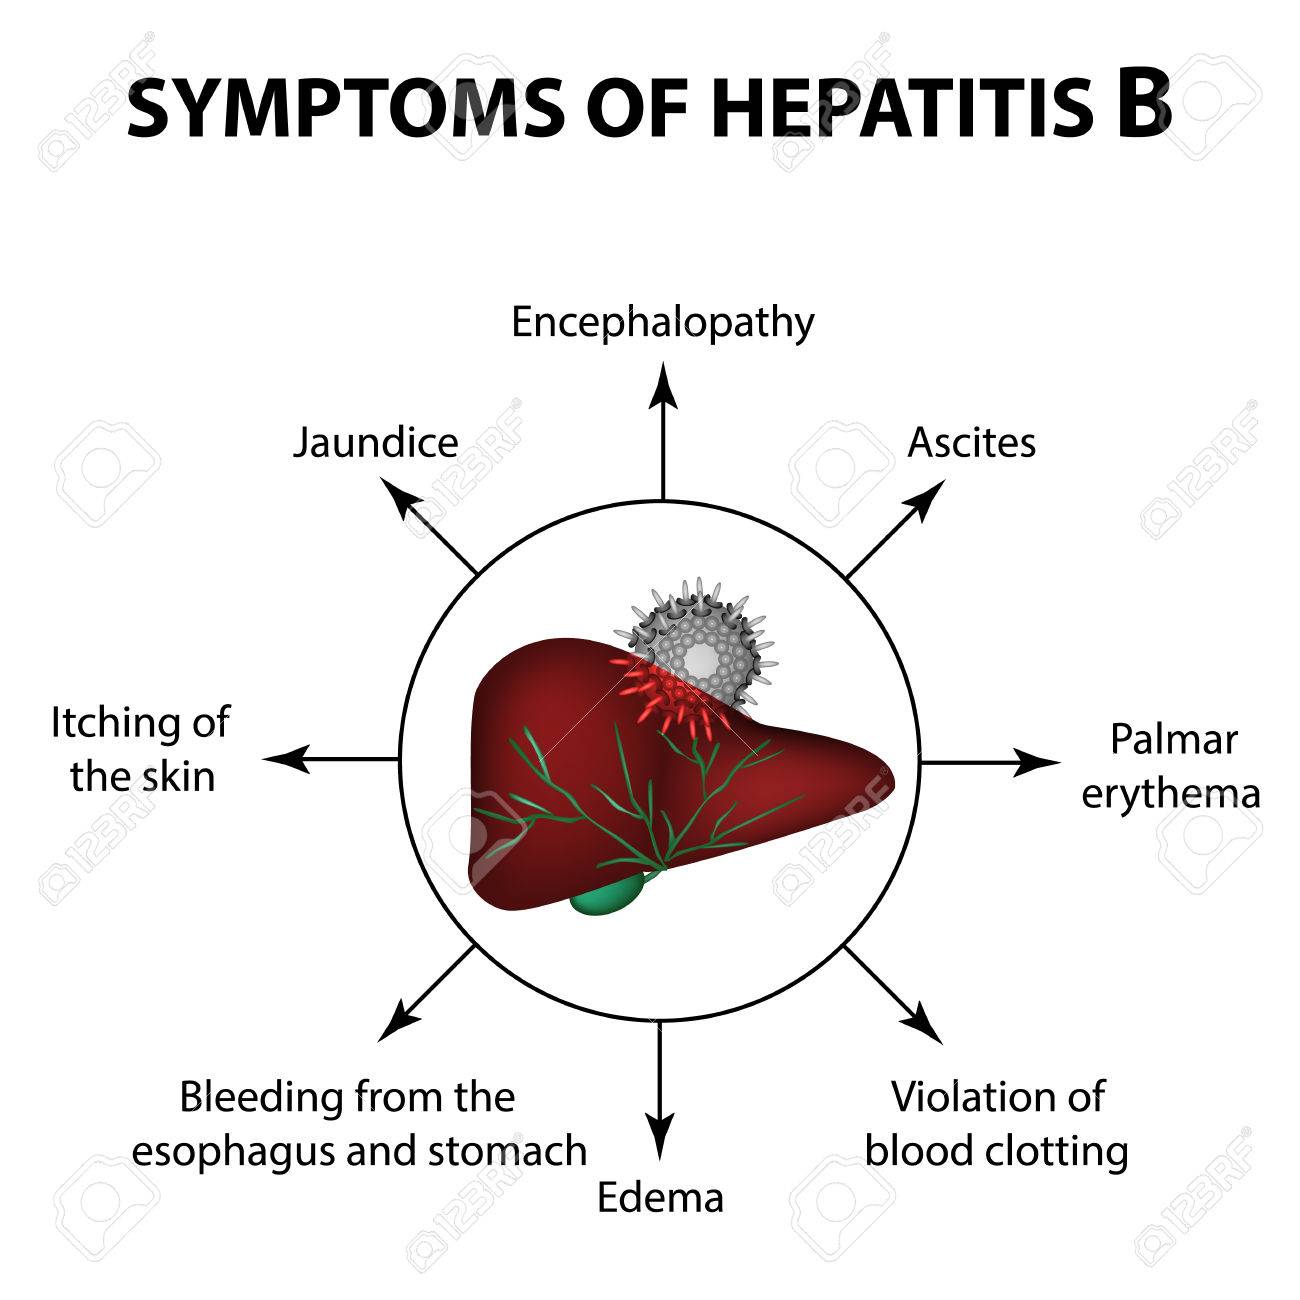 HEPATITIS B SOLUTION ~ NATURAL HEALTH